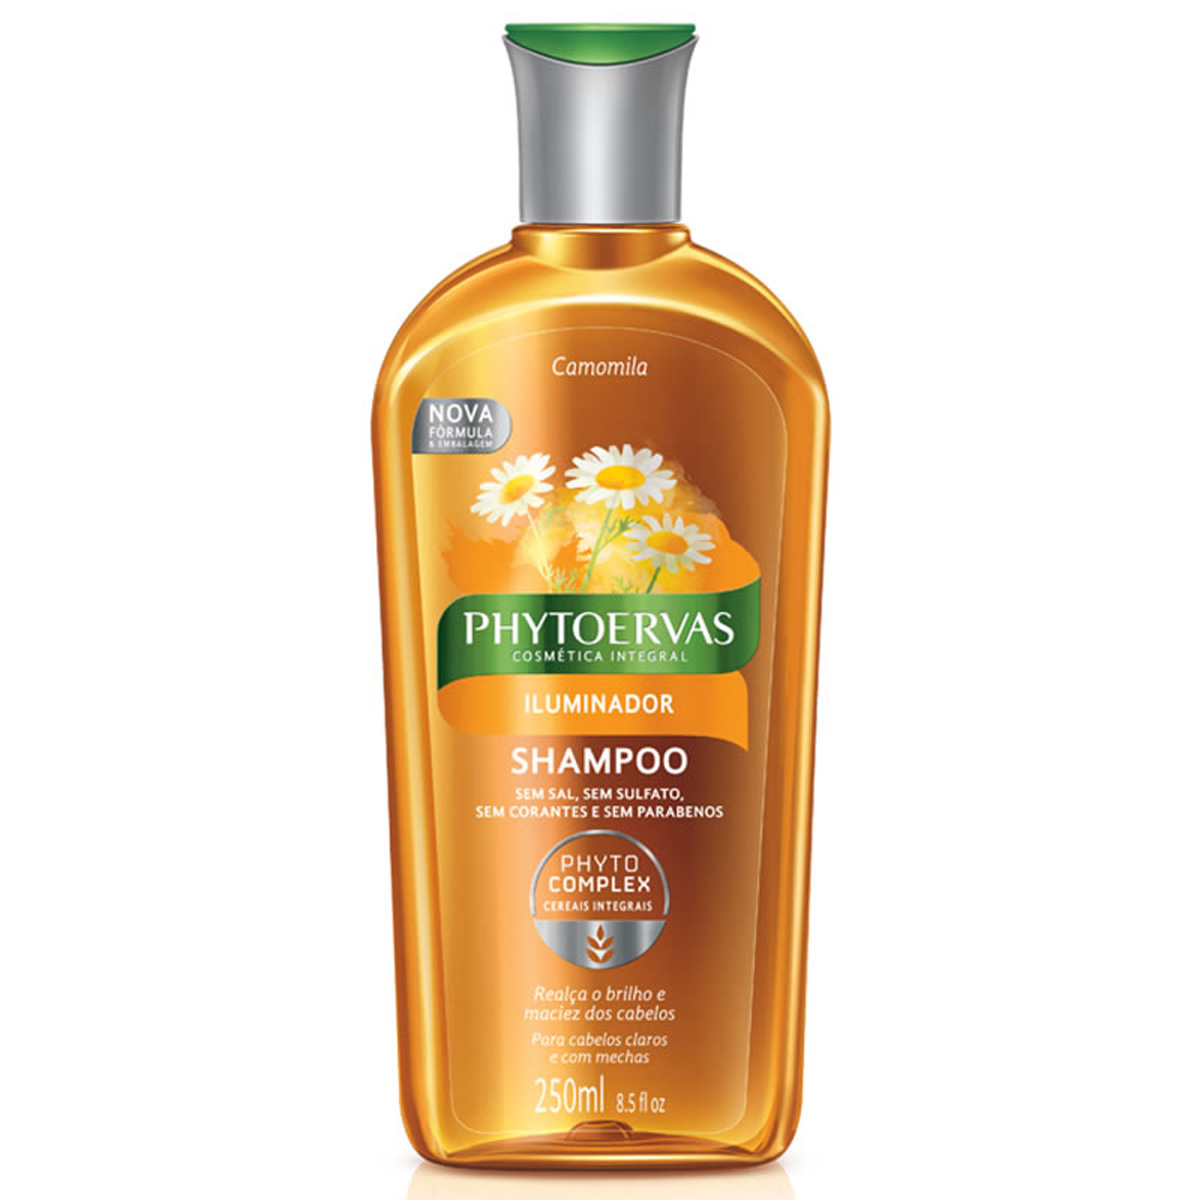 Shampoo Camomila Phytoervas Iluminador com 250ml